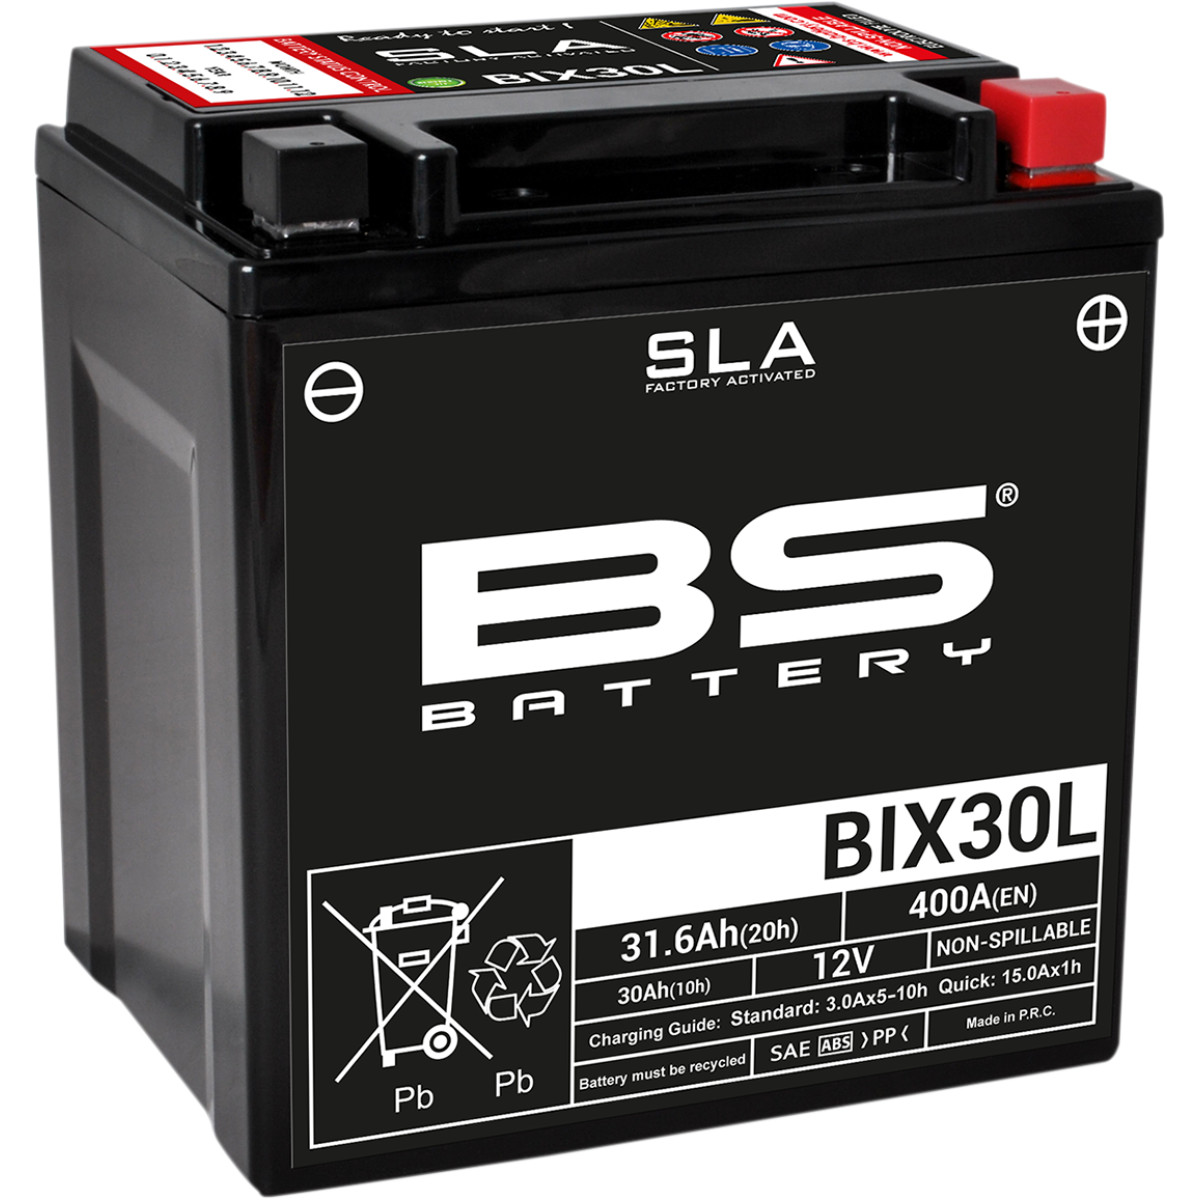 Bs battery. Bix30hl аккумулятор. 31.6 Ah 400a аккумулятор.